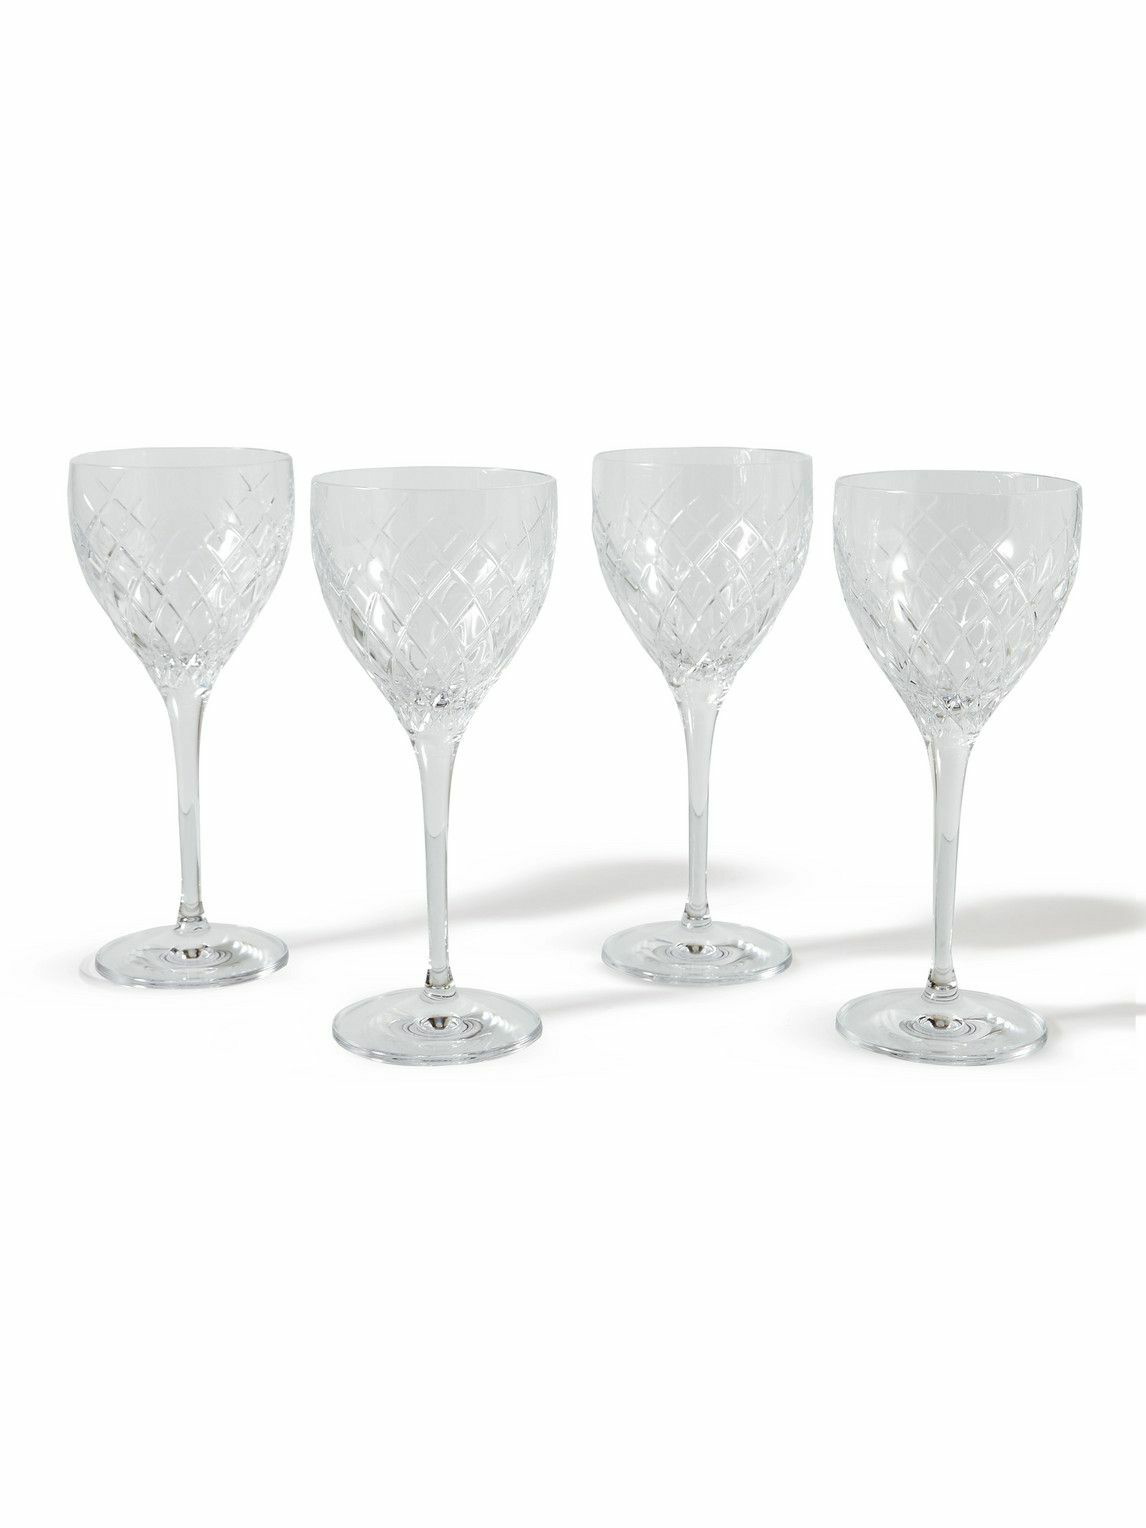 Barwell Set of Four Crystal Rocks Glasses